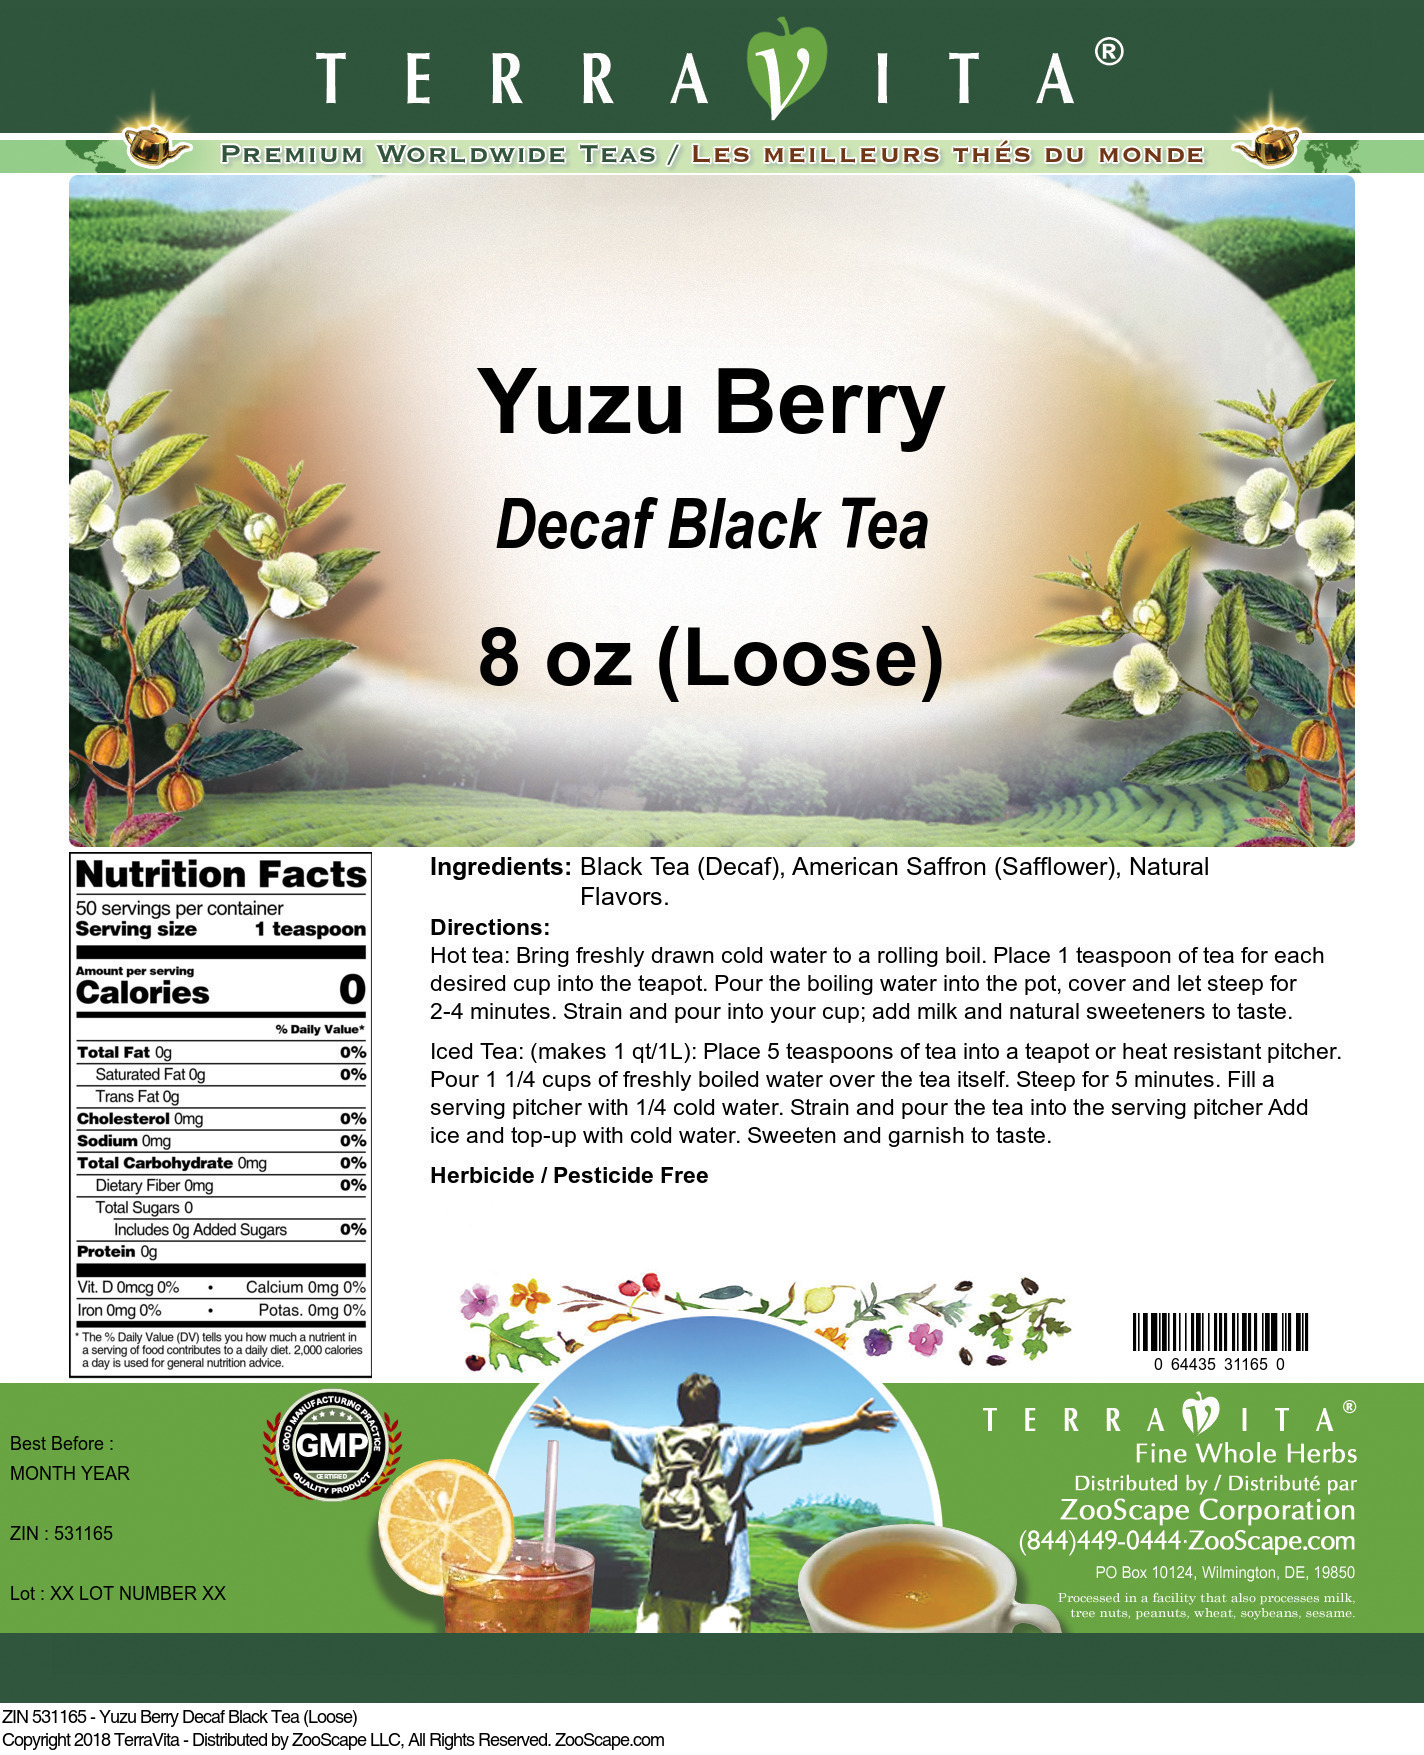 Yuzu Berry Decaf Black Tea (Loose) - Label